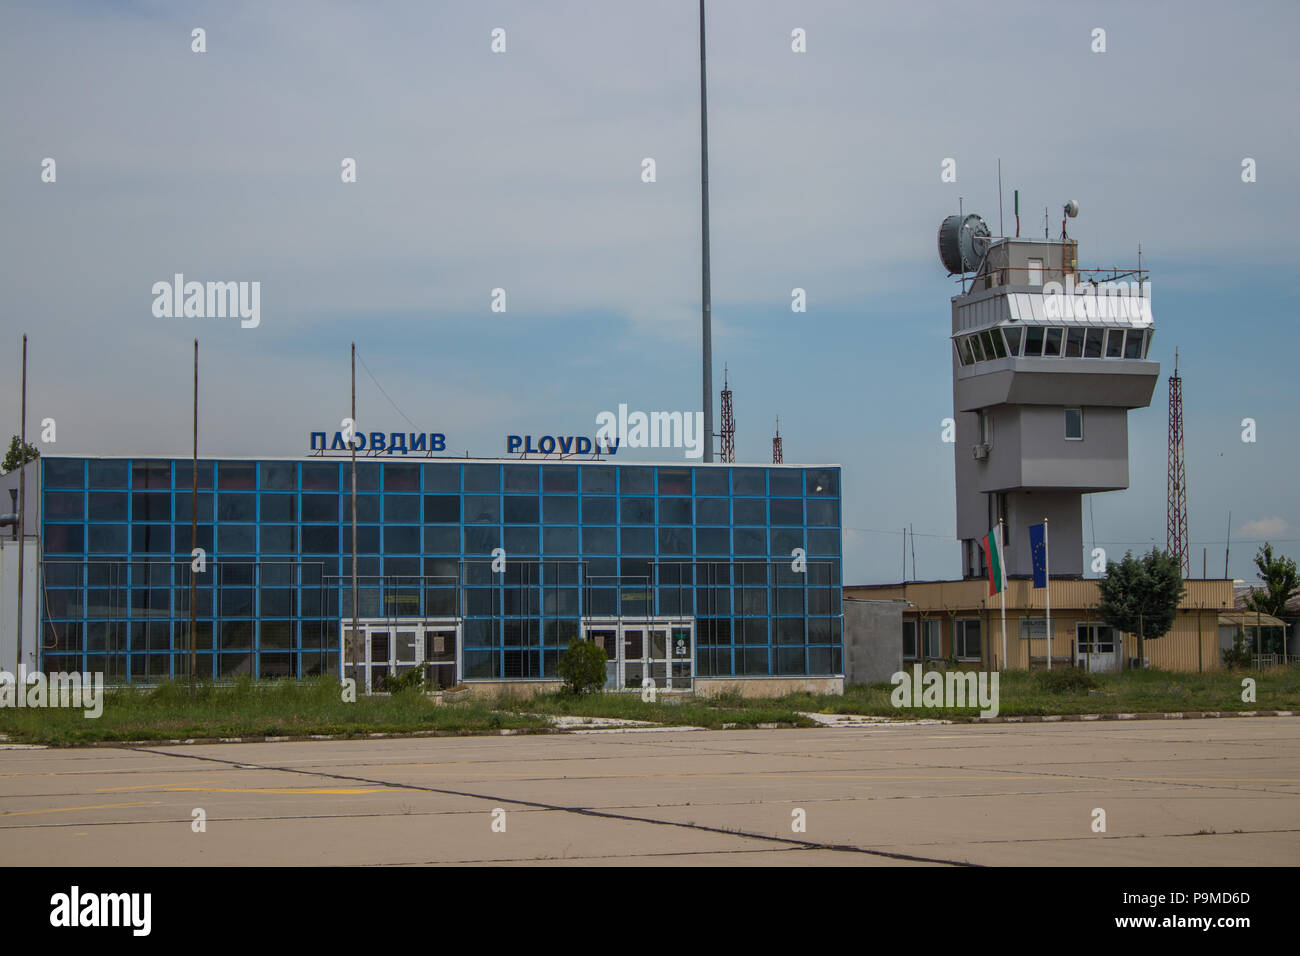 Old run-down airport terminal in Bulgaria Stock Photo